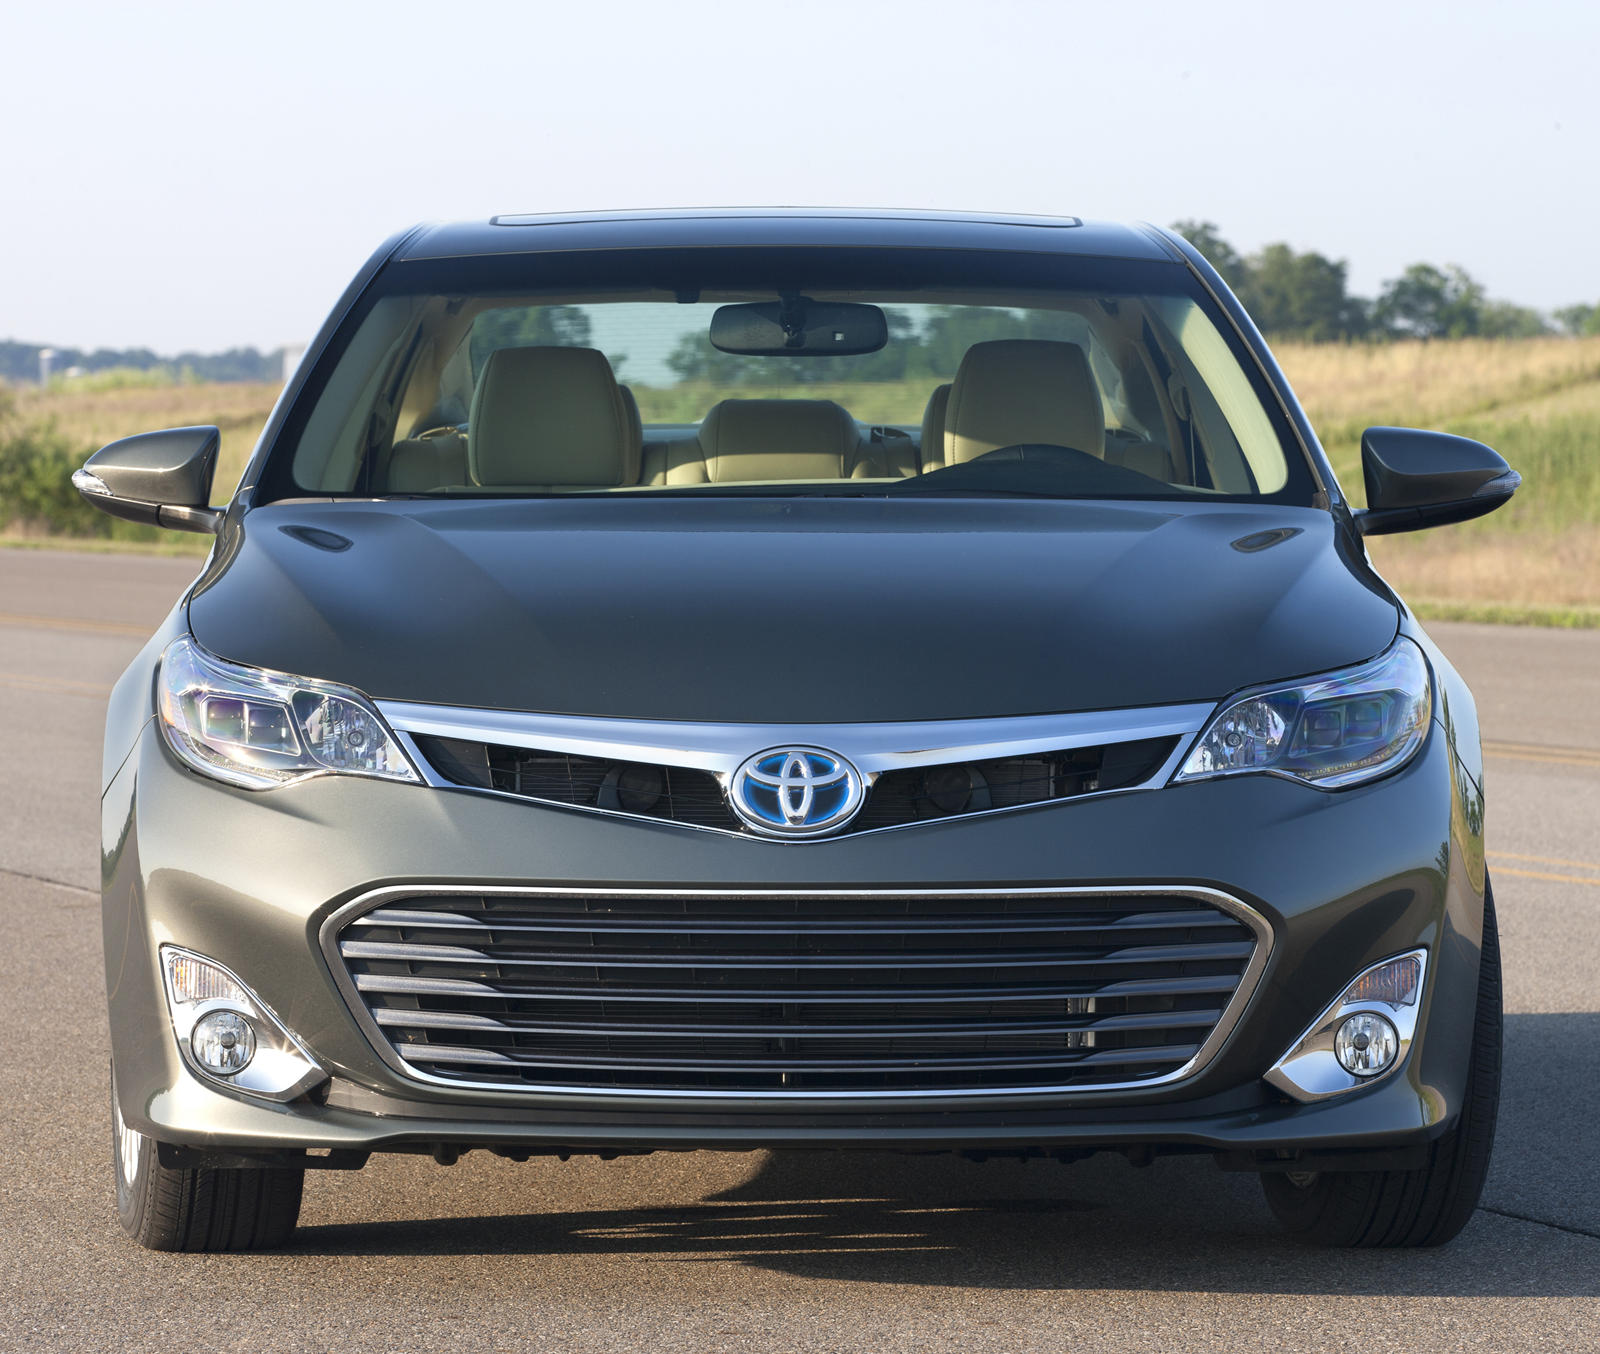 2015 Toyota Avalon Hybrid Front View